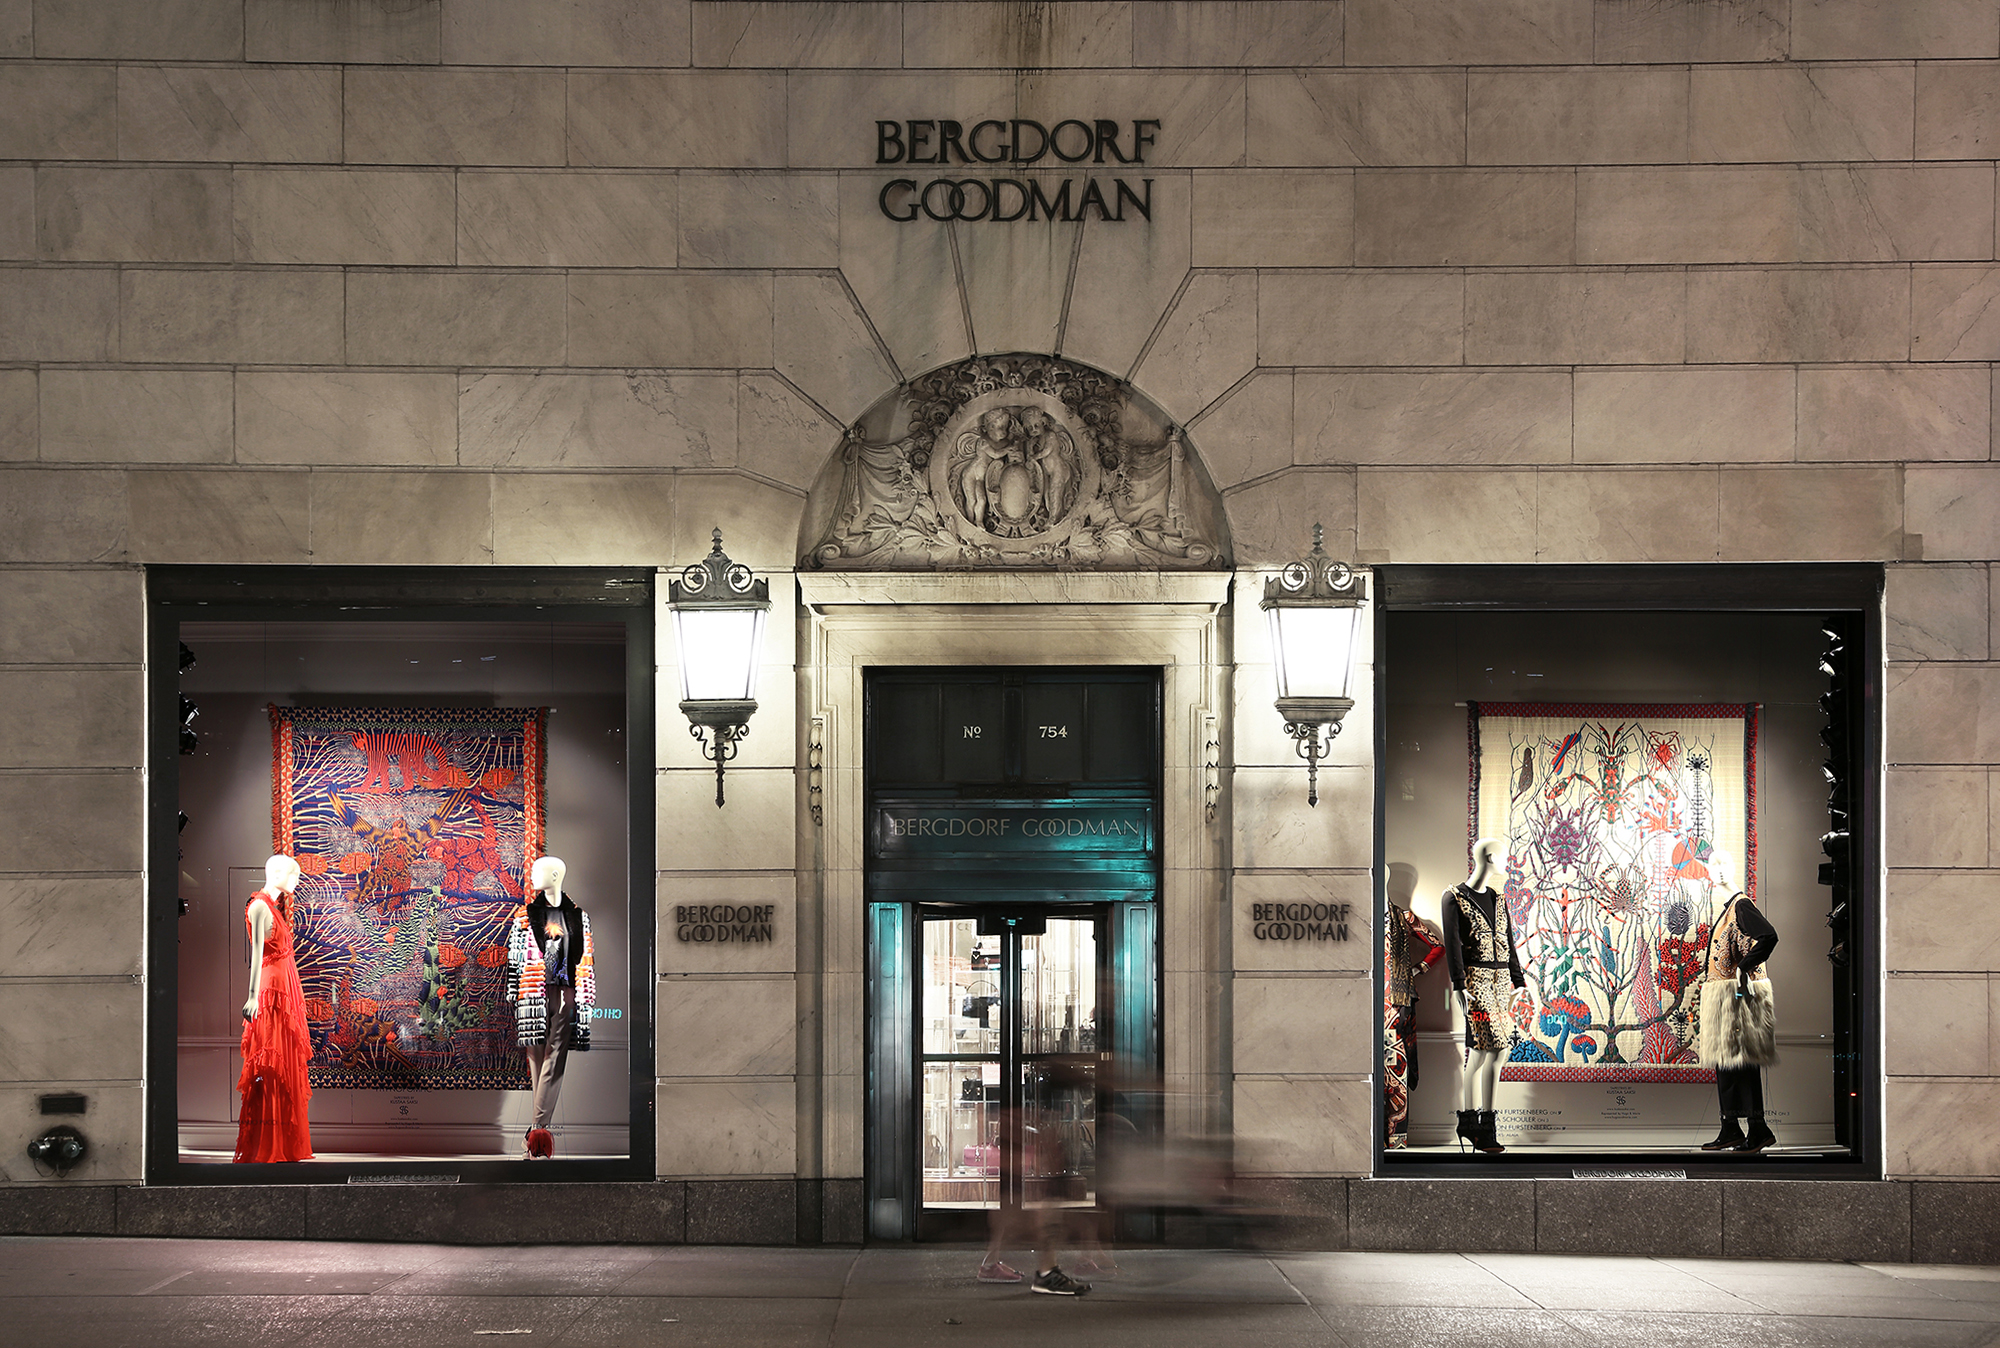 Bergdorf Goodman — Waterfall Mansion & Gallery